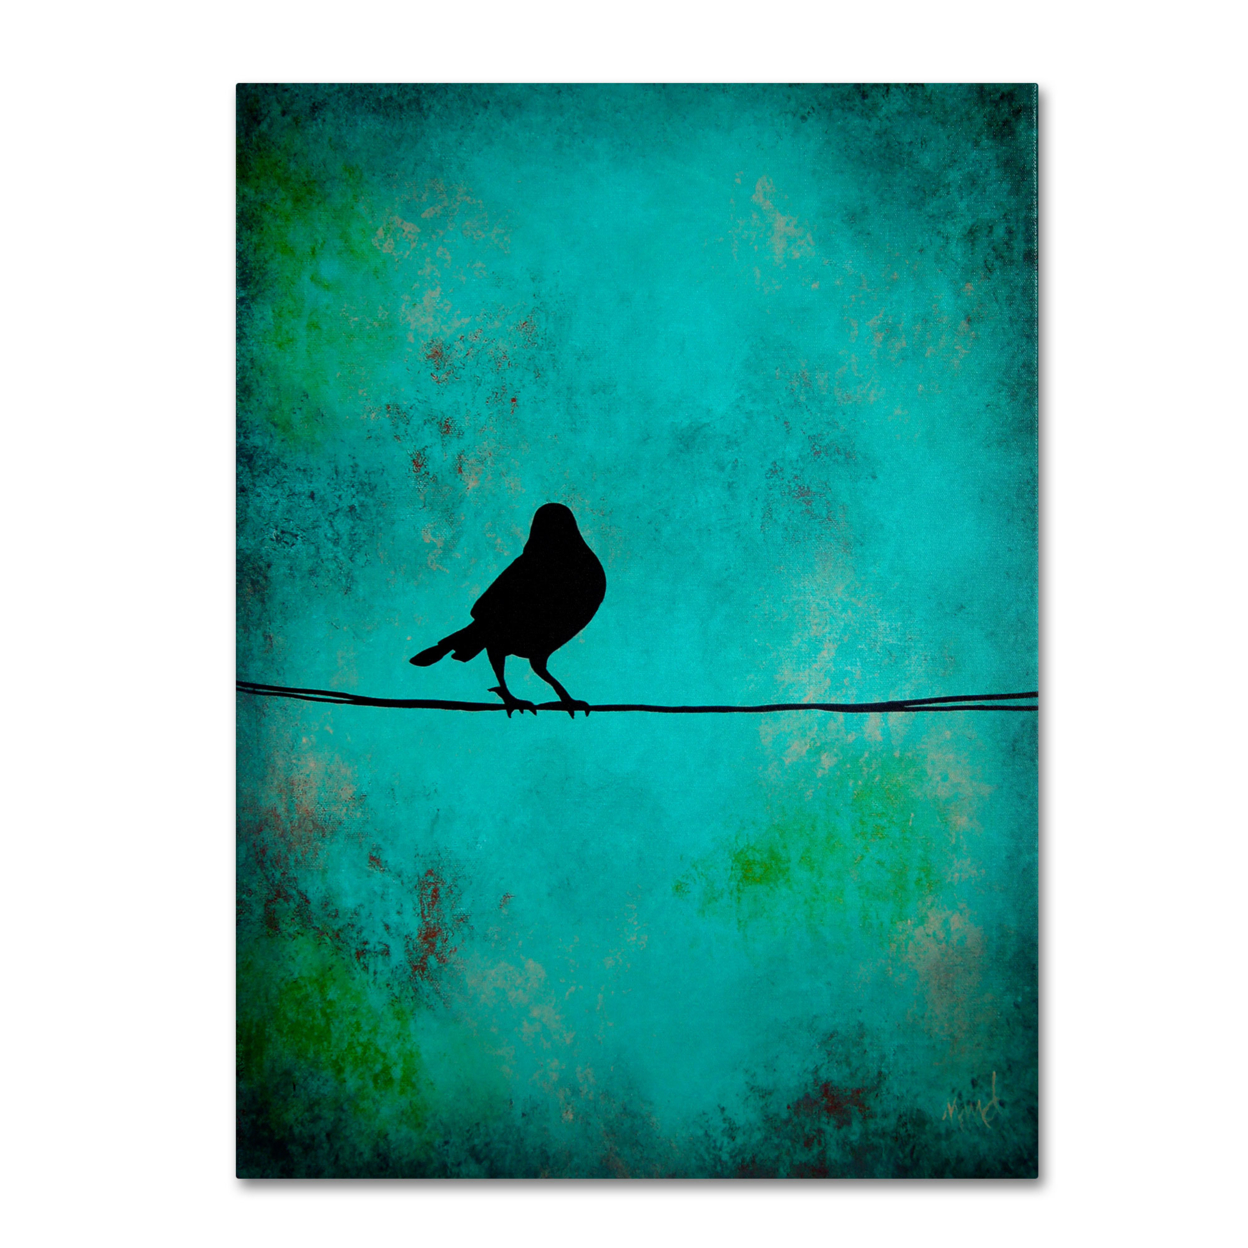 Nicole Dietz 'Bird's Attention' Canvas Wall Art 35 X 47 Inches